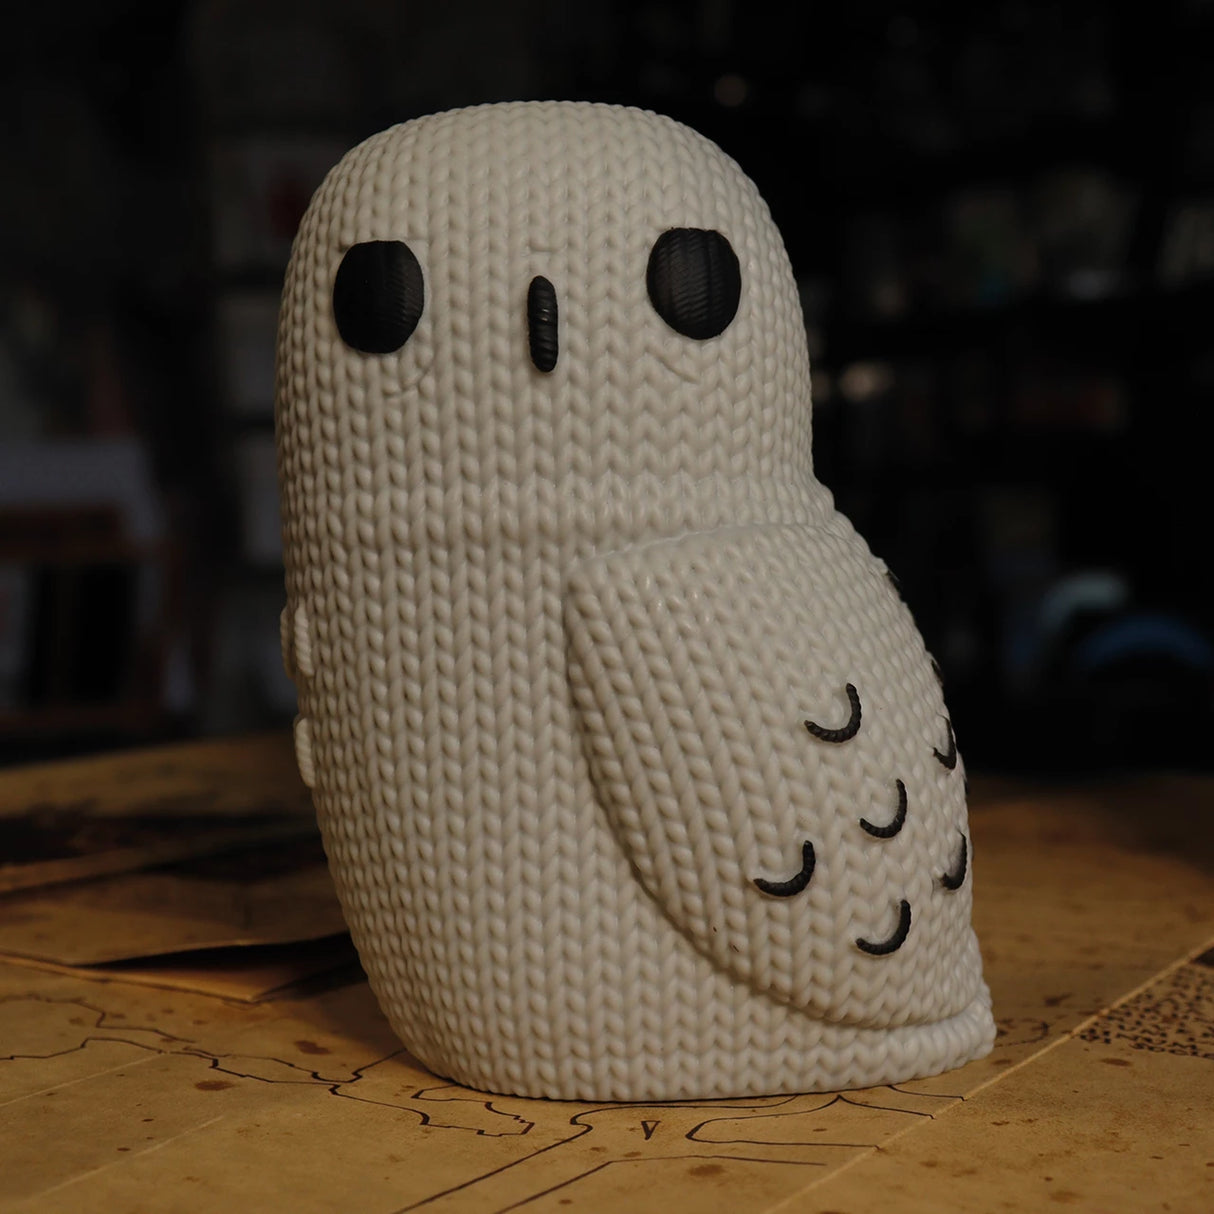 Handmade by Robots | Harry Potter | Hedwig Vinyl Figure | Knit Series #068